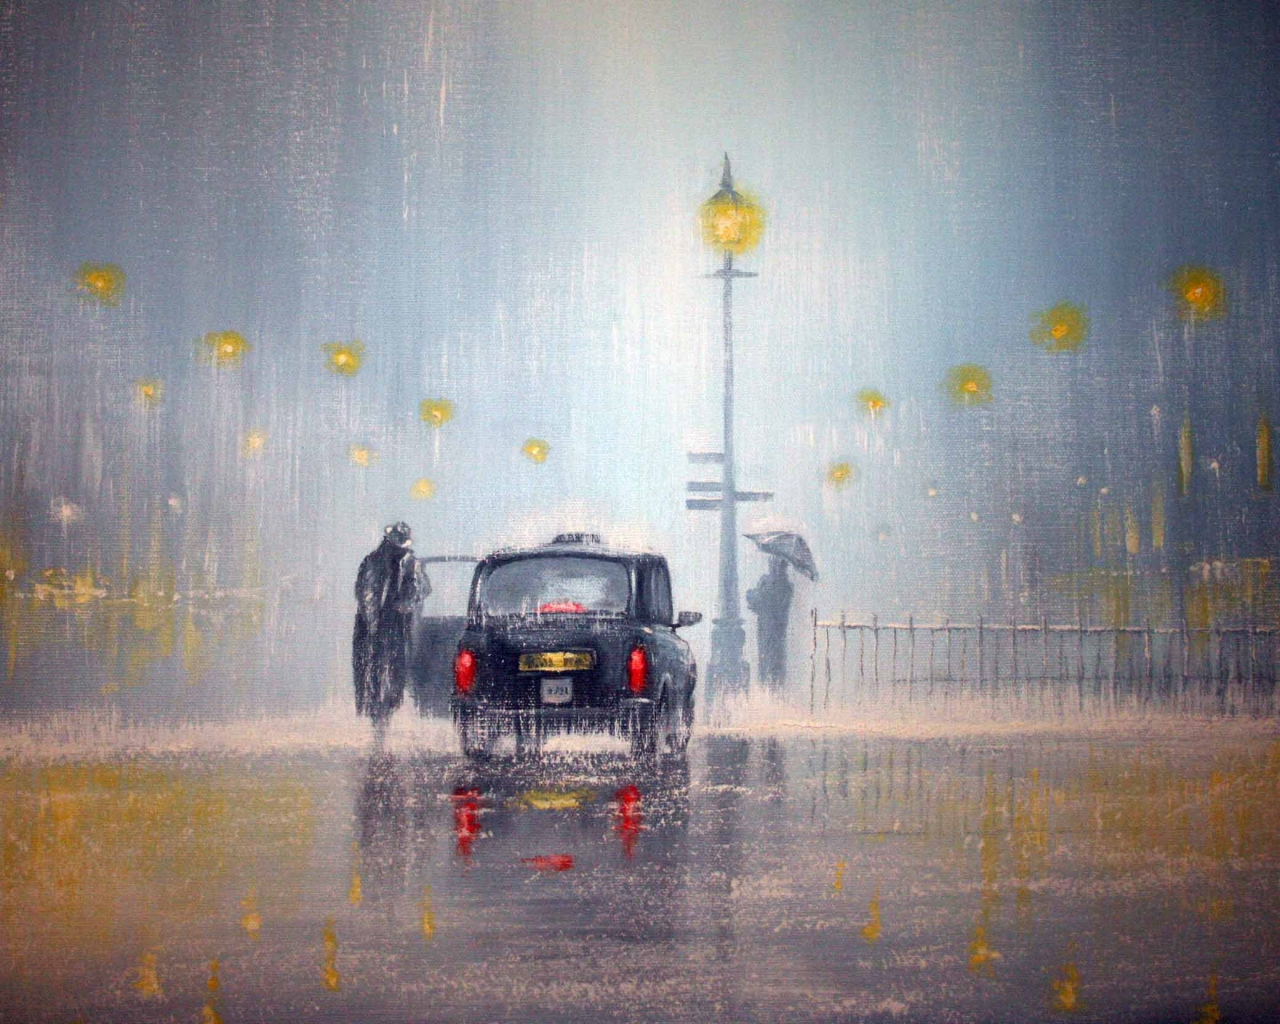 фары, фонари, человек, зонт, Jeff rowland, свет, дождь, машина